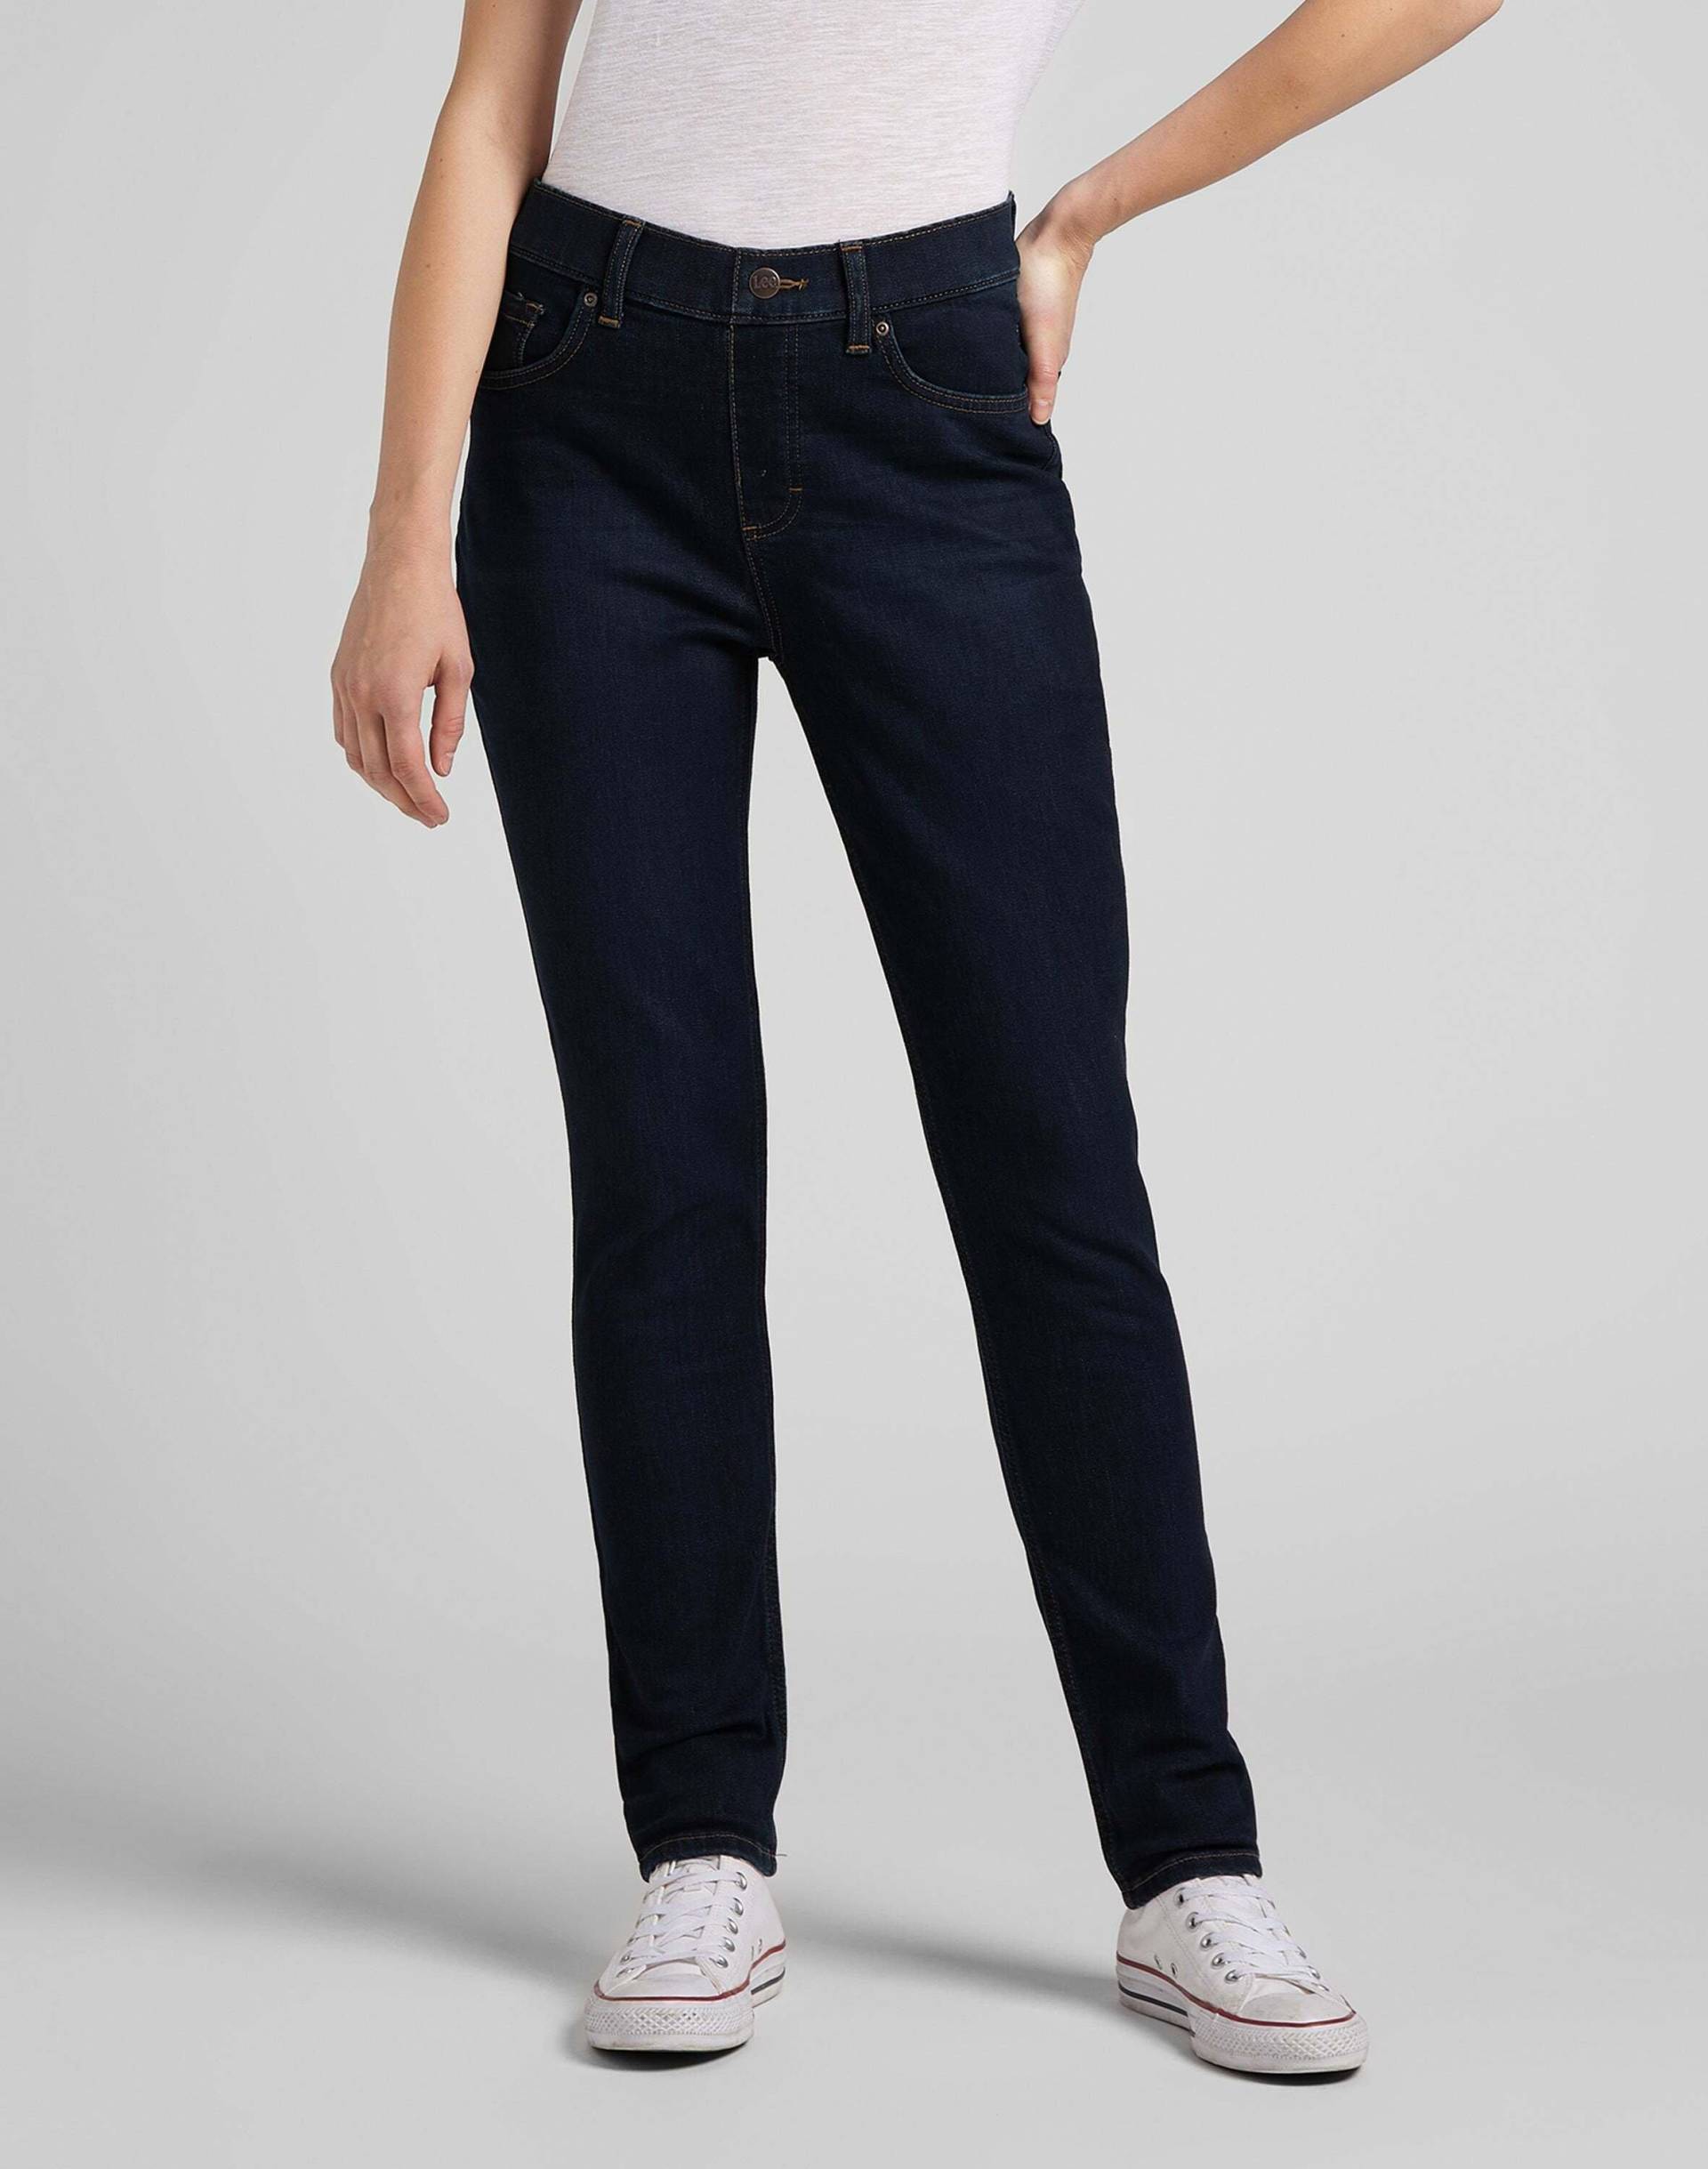 Jeans Skinny Fit Comfort Damen Marine L33/W31 von Lee